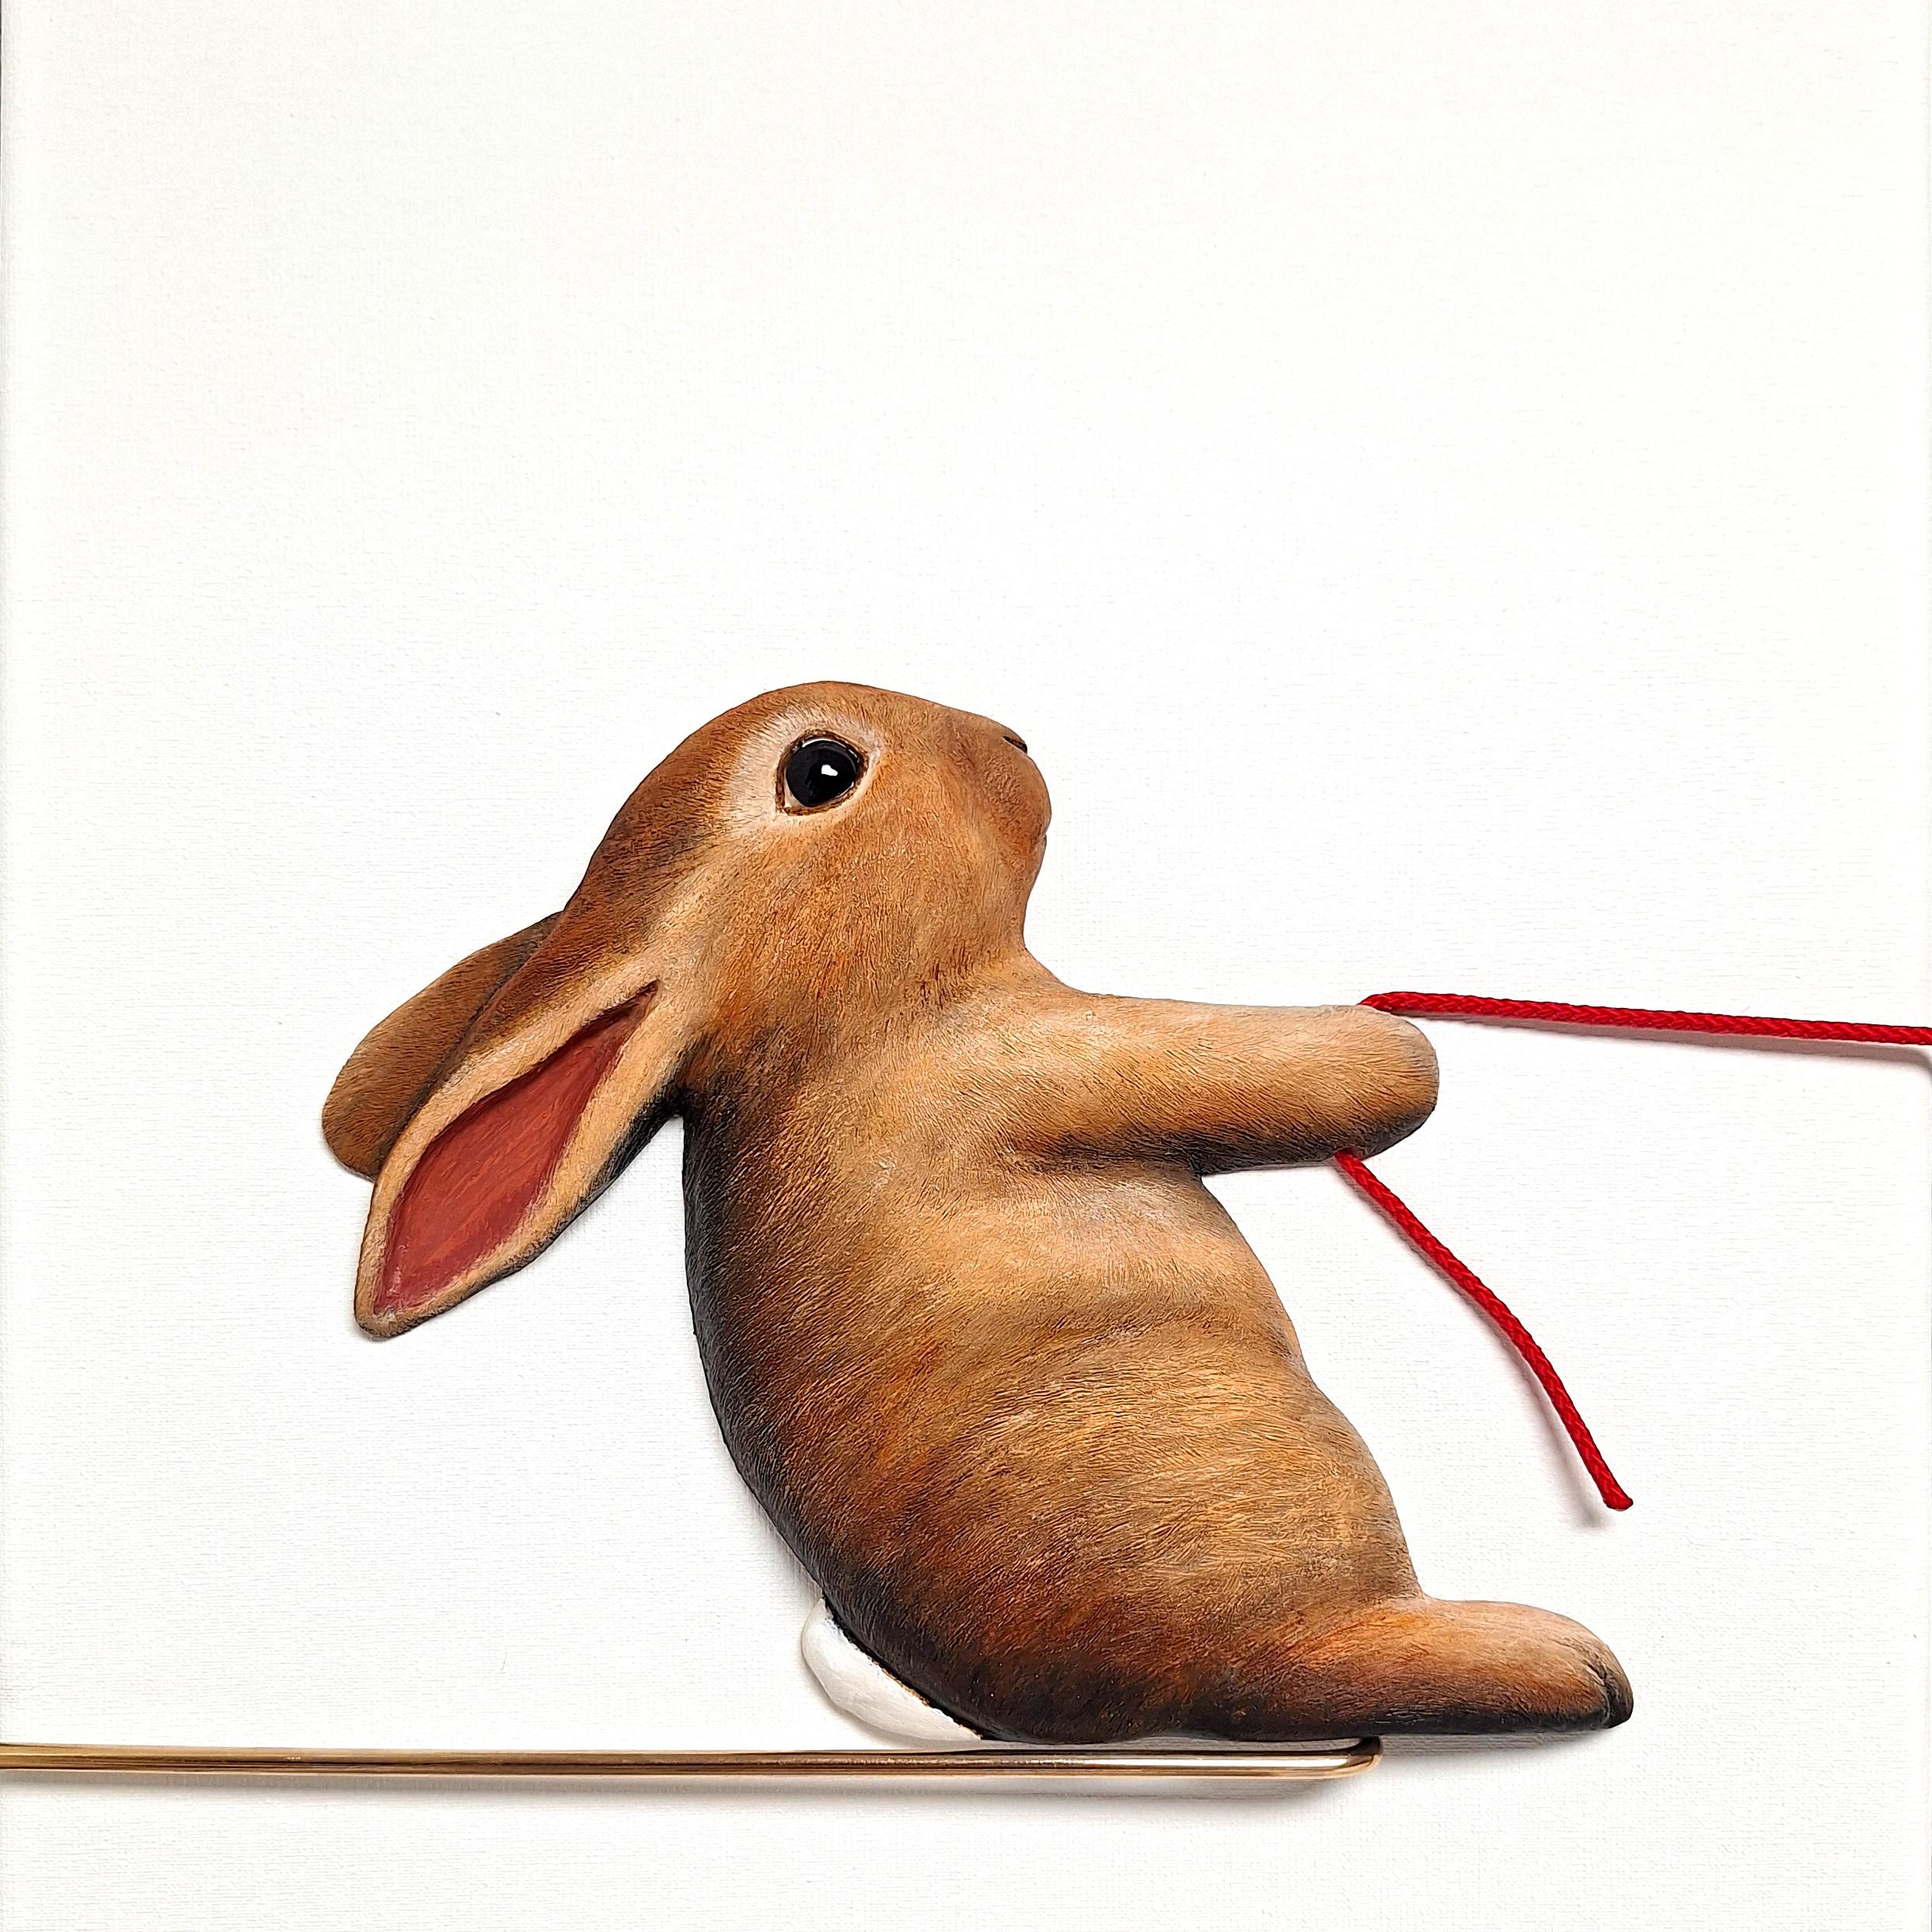 Mine-original realism wildlife bunny sculpture-painting-Artwork-contemporary Art - Sculpture by Henk Jan Sanderman